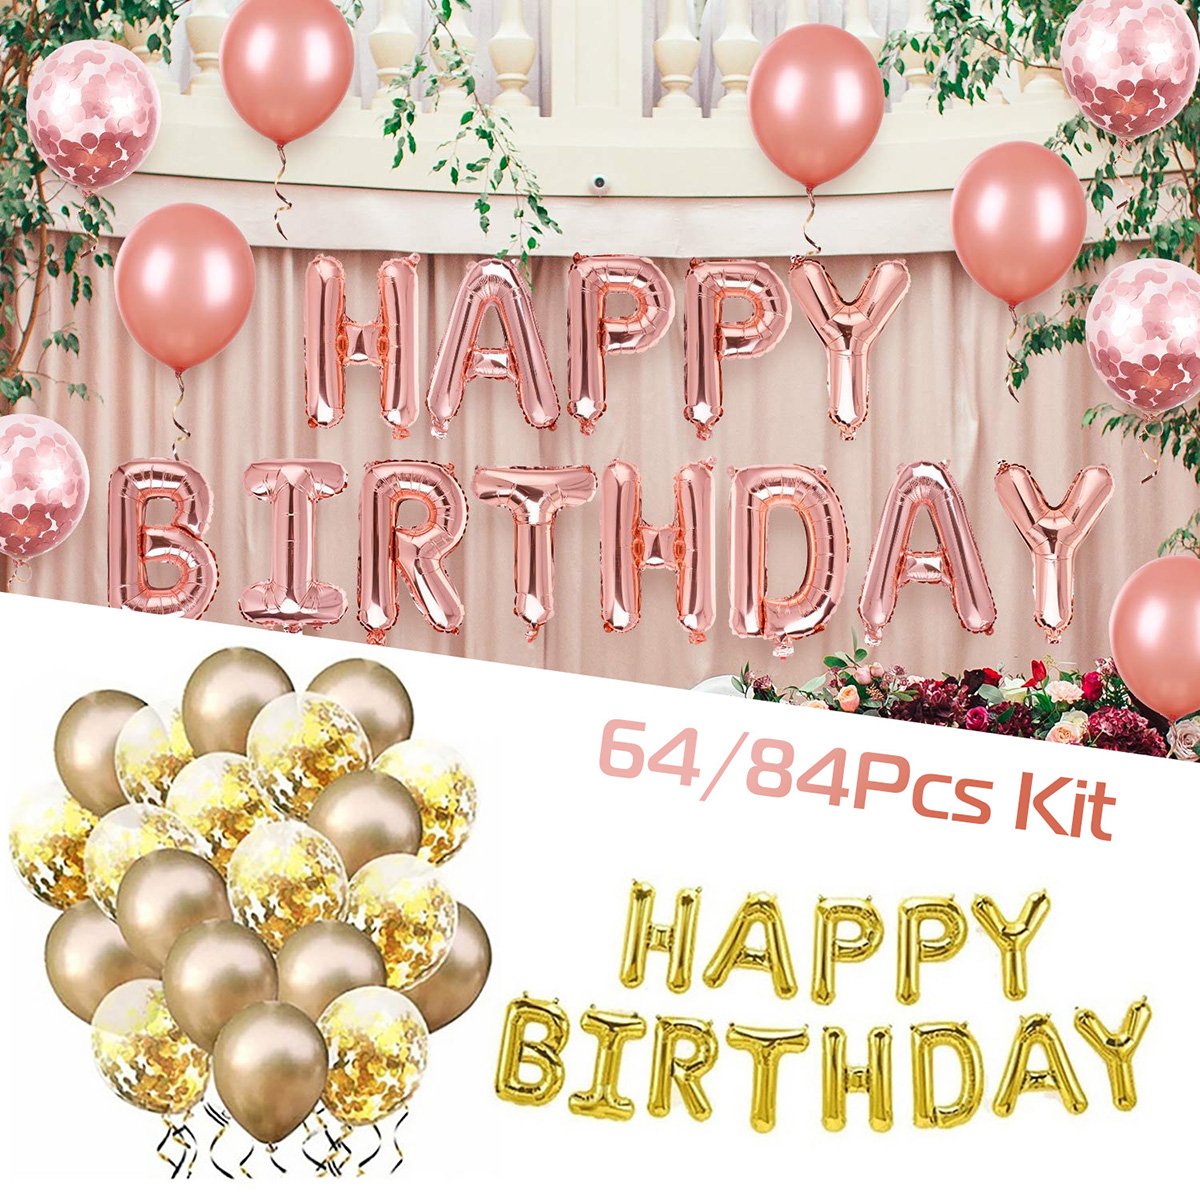 quotHappy-Birthdayquot-Aluminum-Foil-Balloon-Confetti-Birthday-Decoration-Set-For-Birthday-Party-Dec-1926326-1